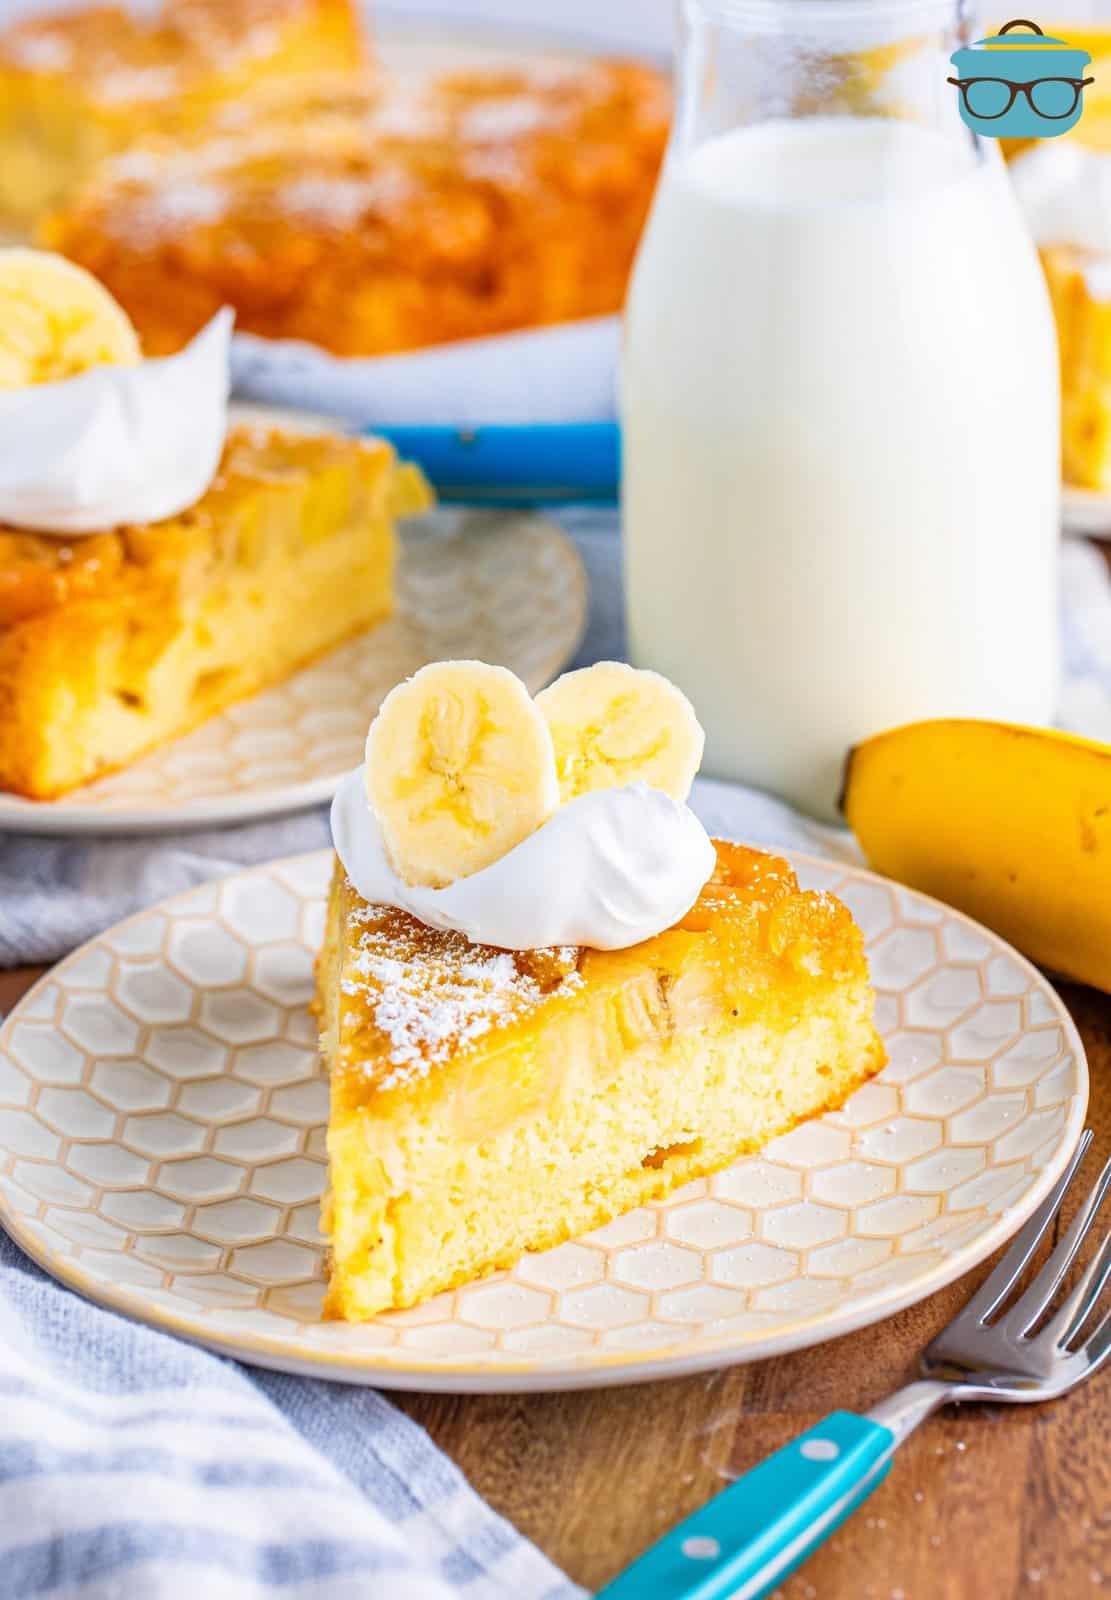 A slice of banana upside down cake on a plate.